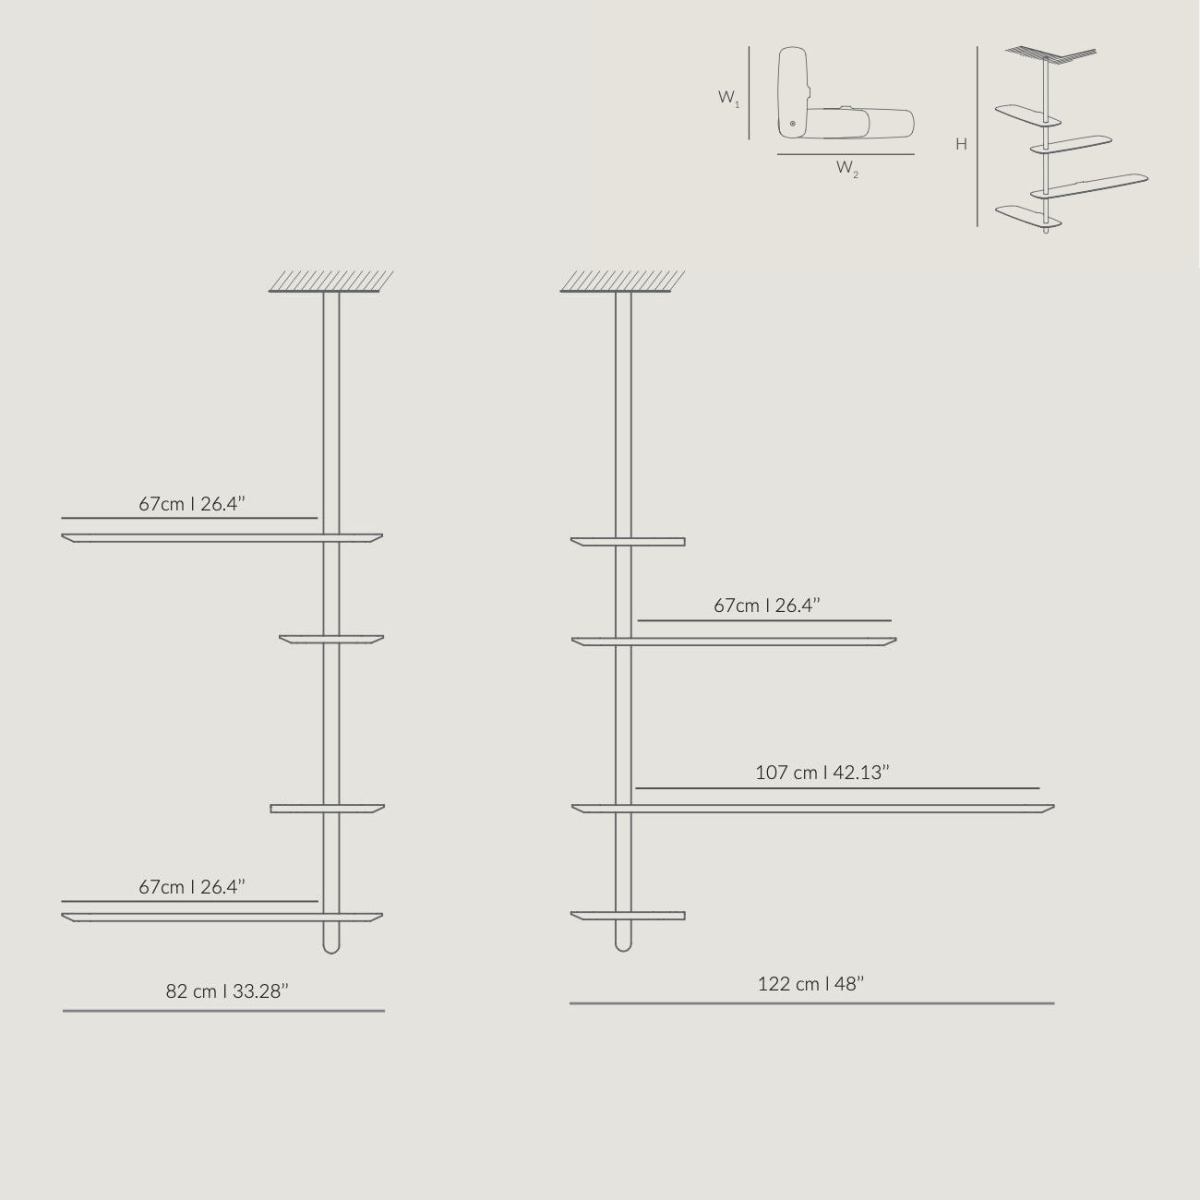 Design Wall Shelf with Real Wood Veneer for Corner Installation – Model 9 (hanging)